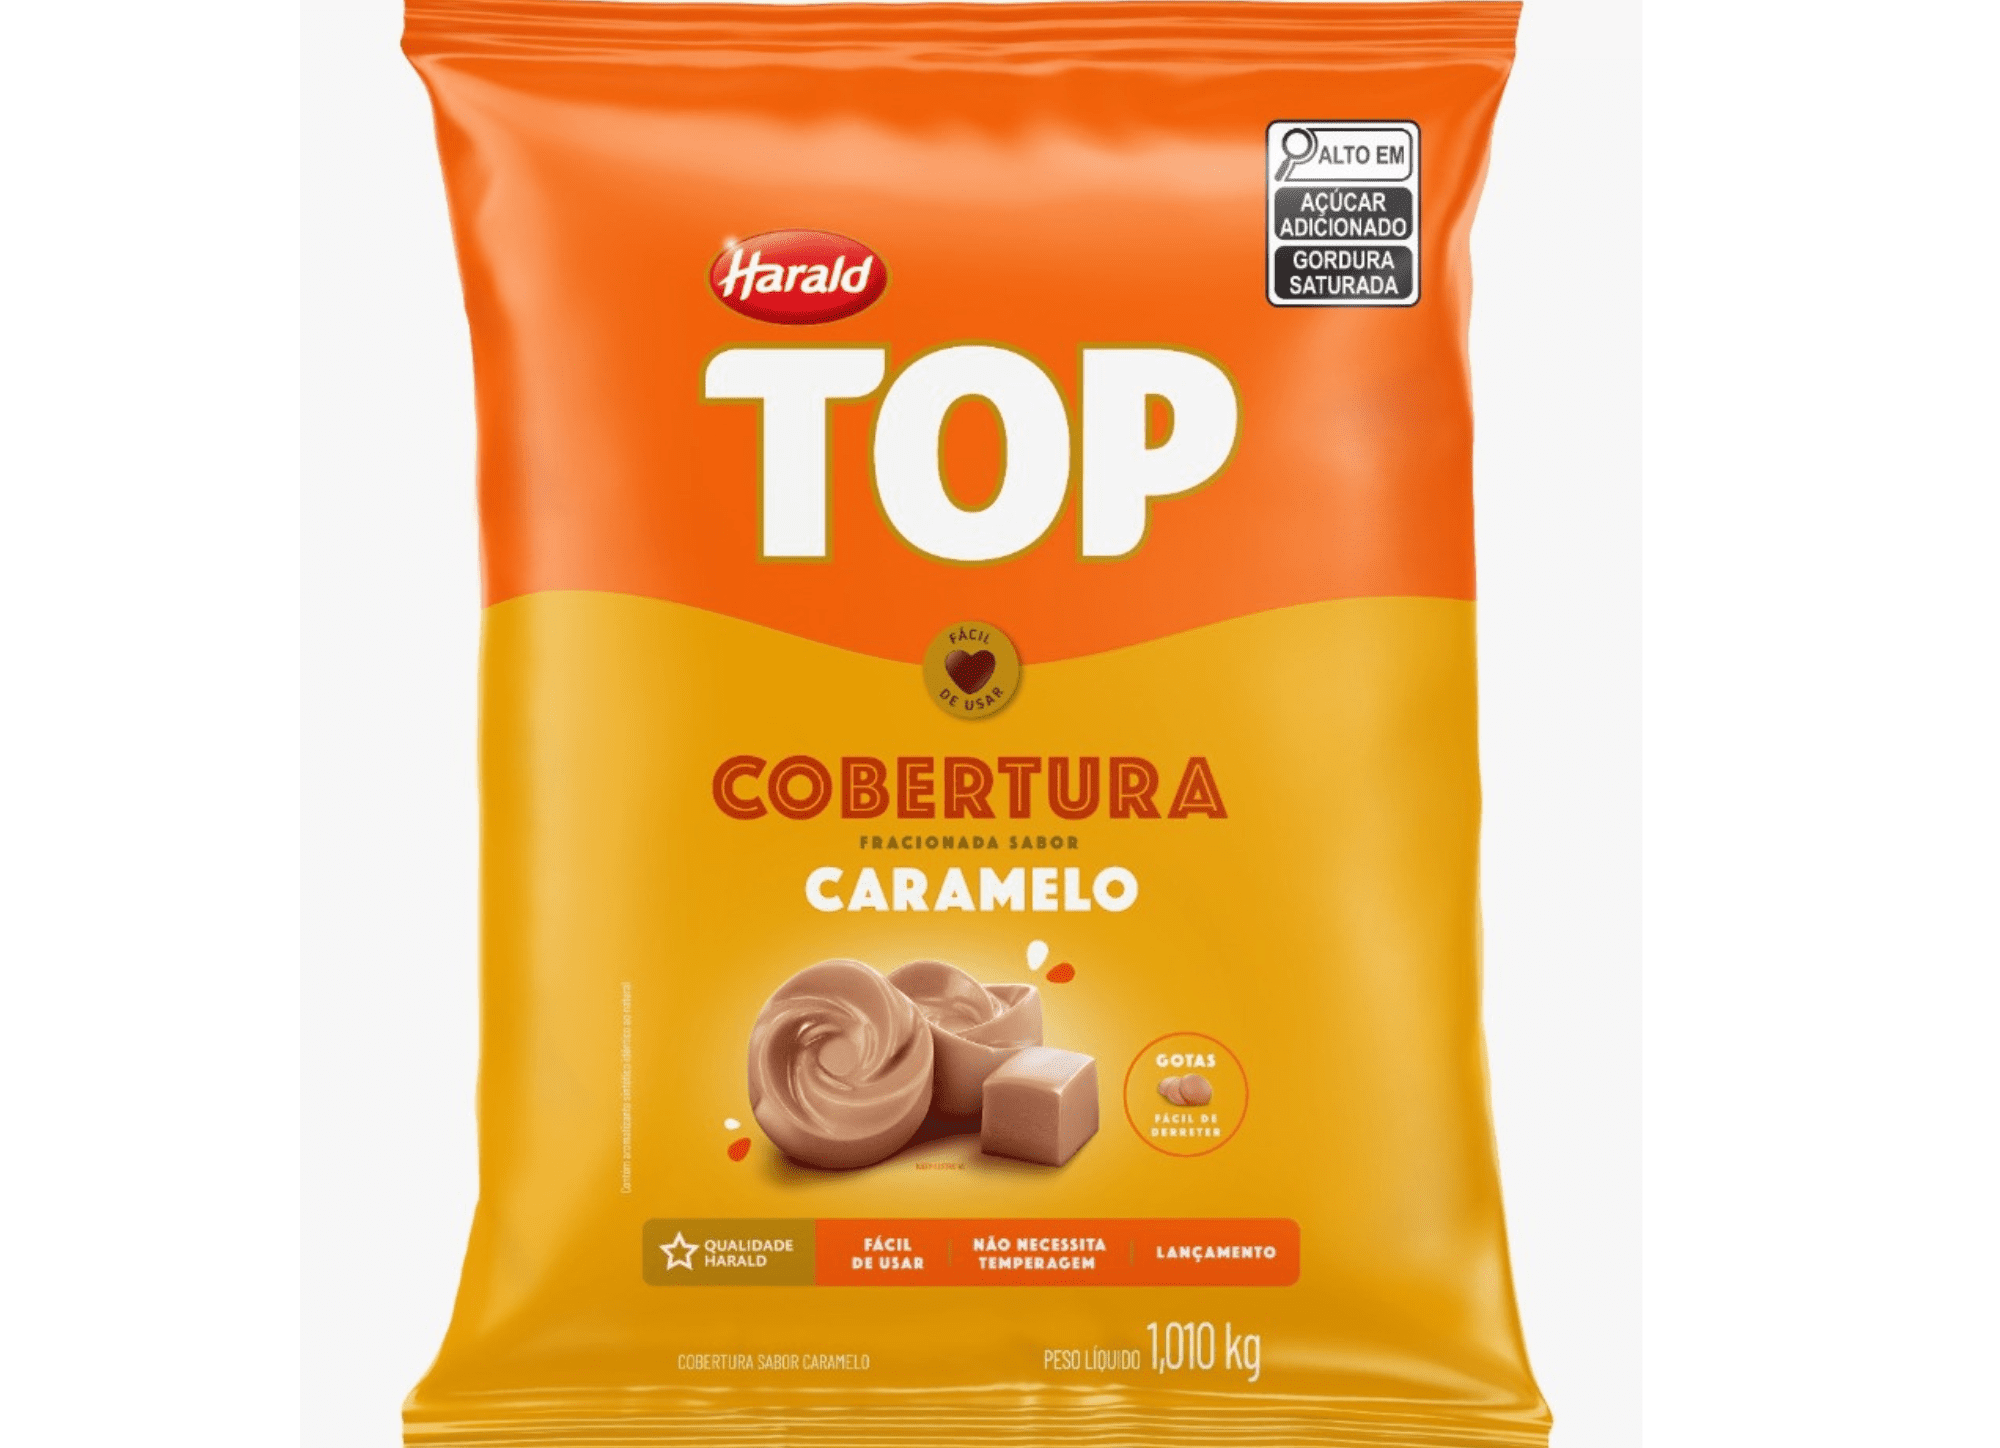 Featured image for “Harald lança nova cobertura TOP sabor Caramelo”